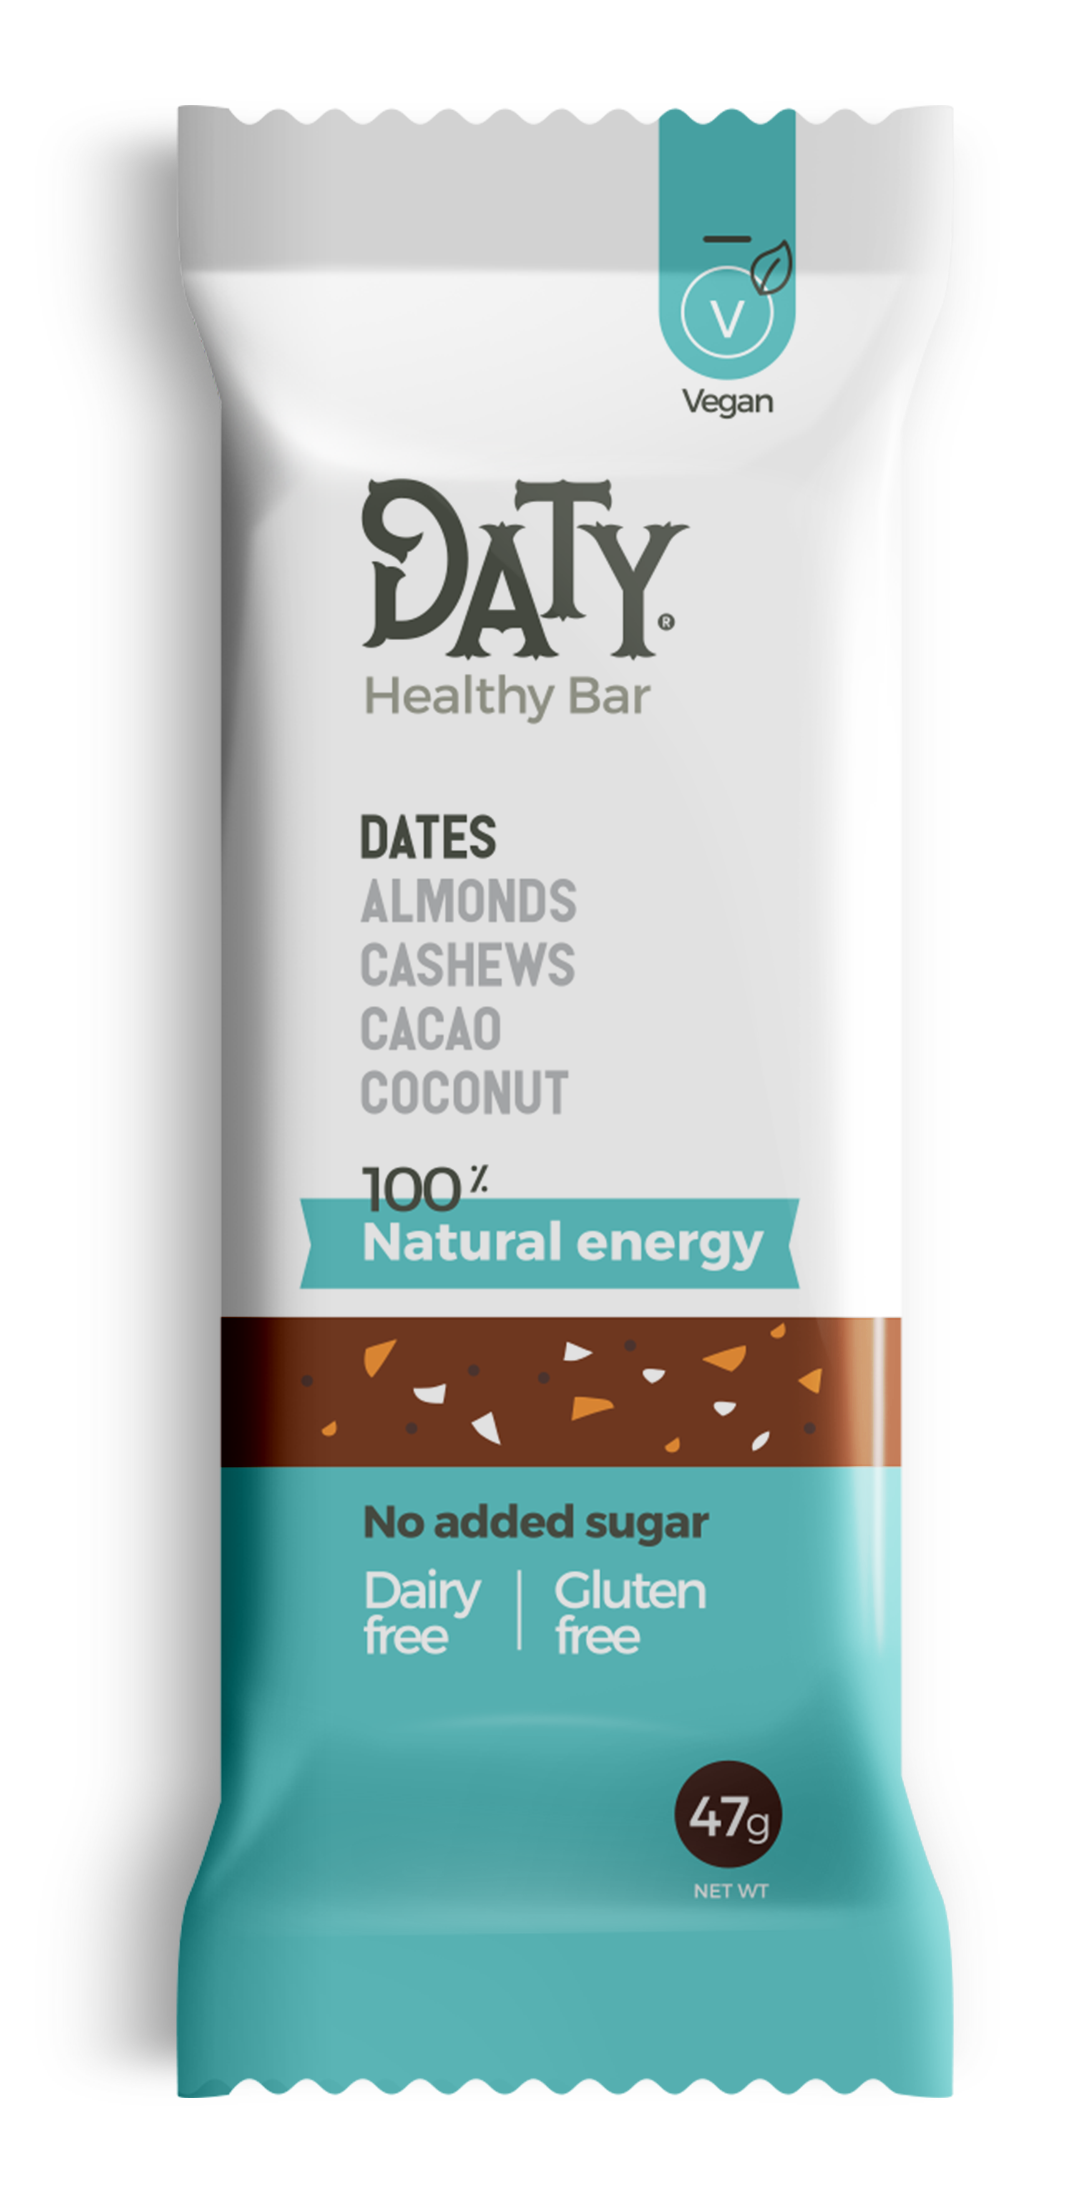 dates_almonds_cashews_coconut_cacao